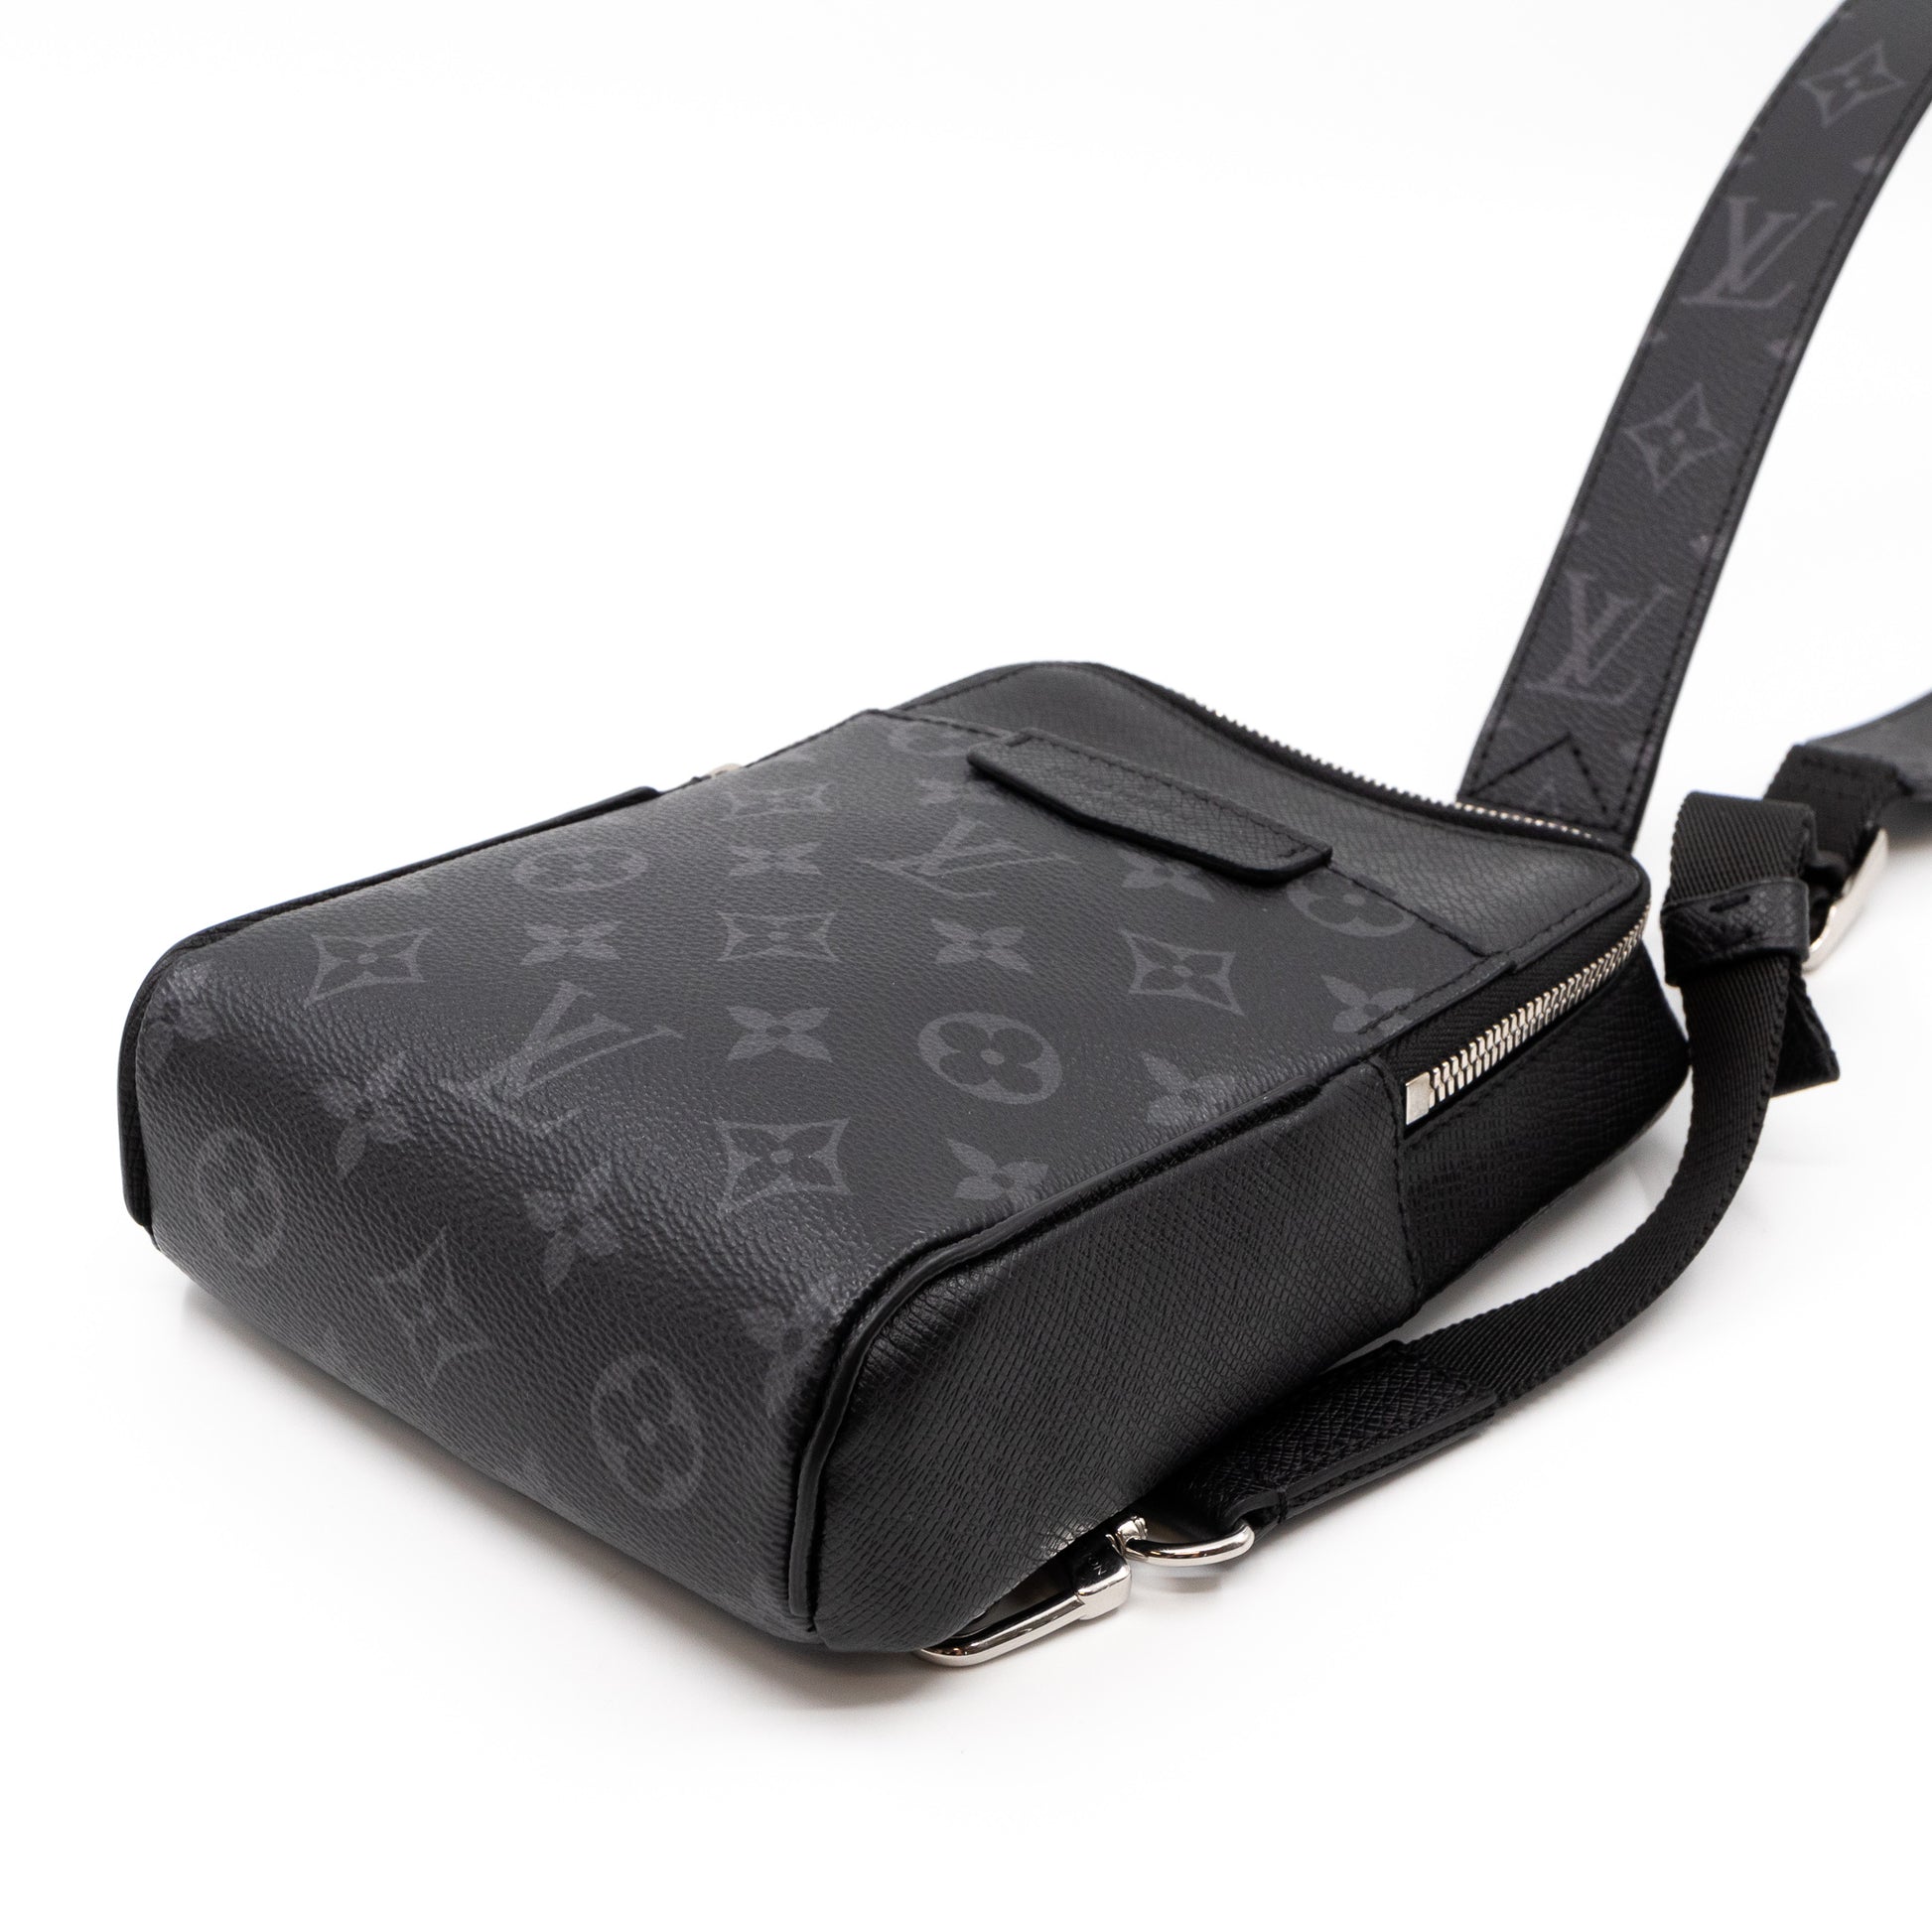 Louis Vuitton Outdoor Slingbag, Black, One Size